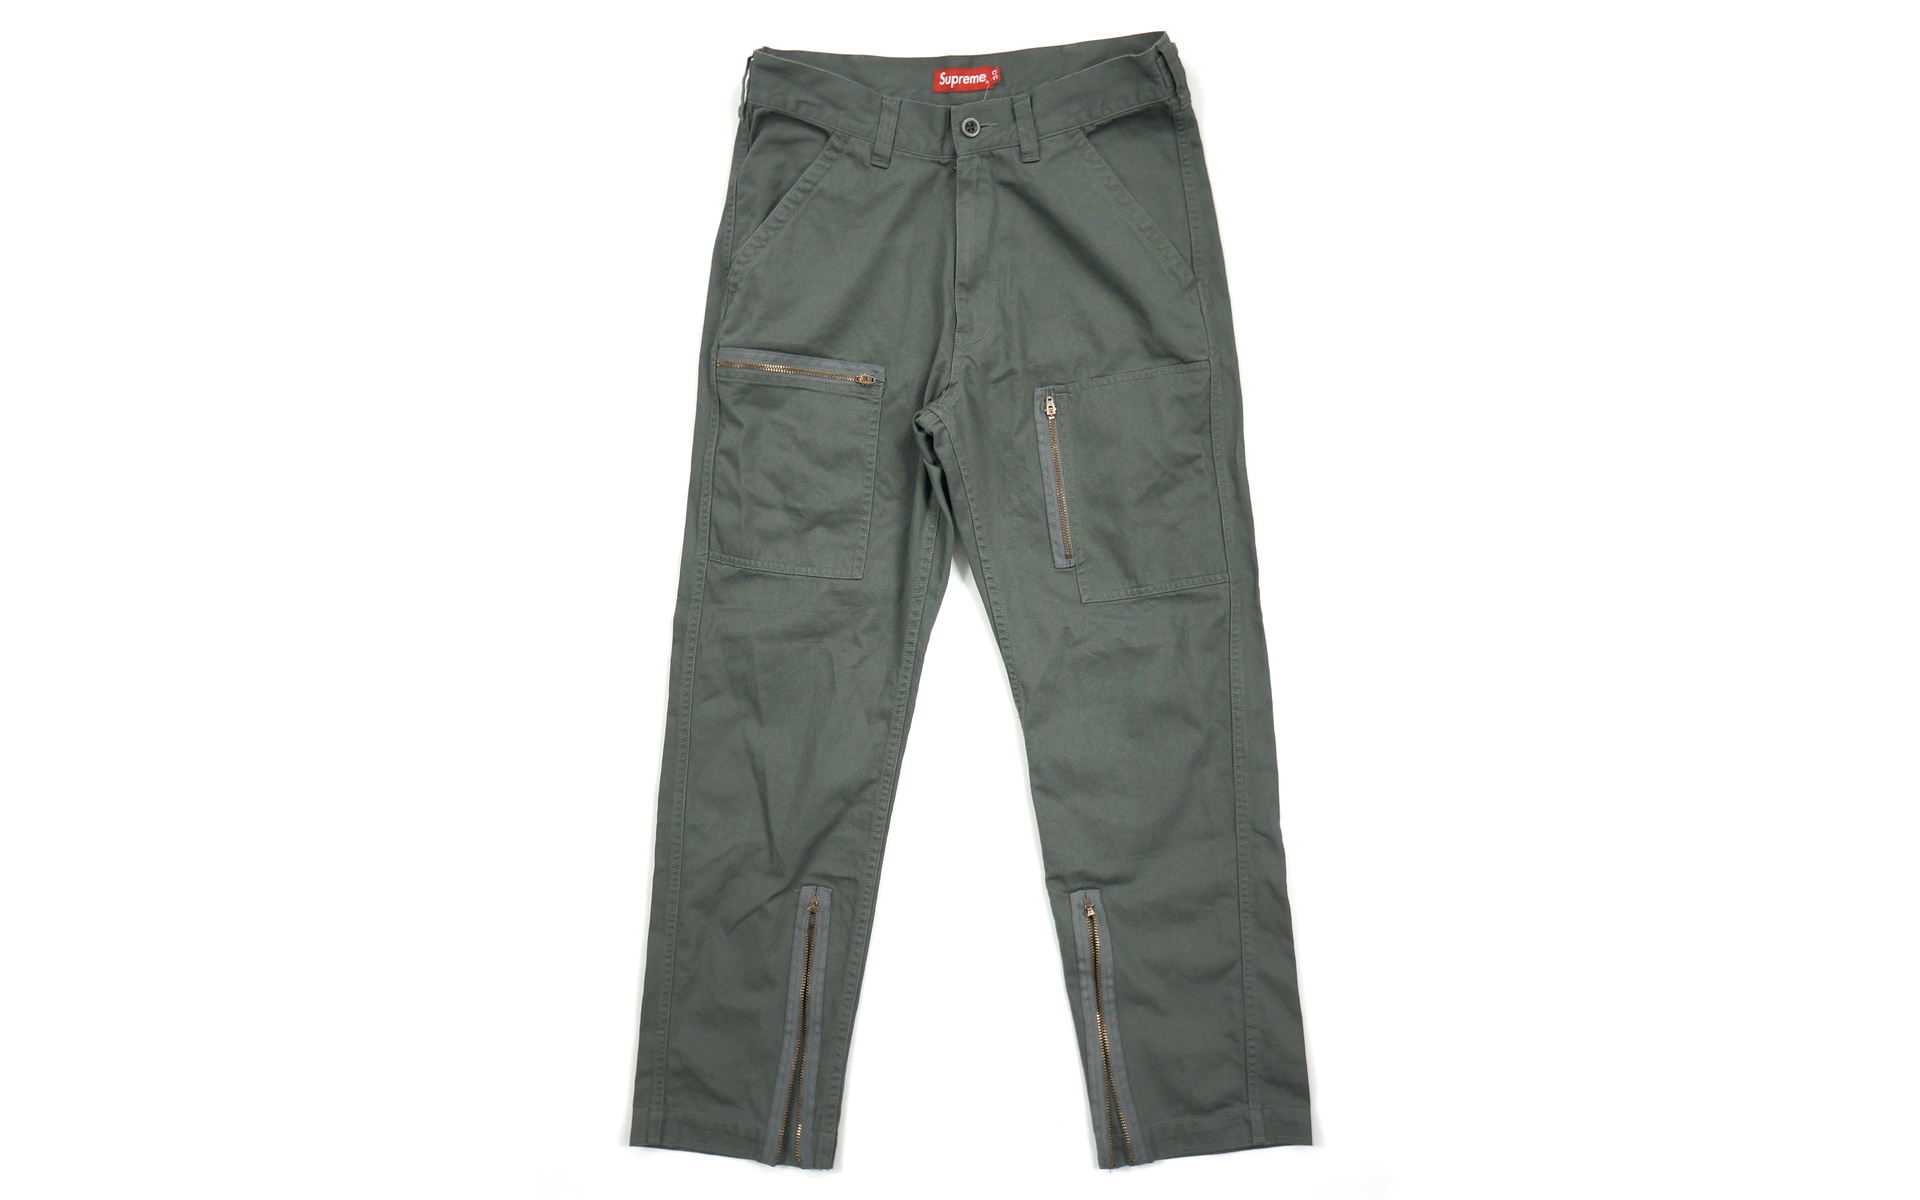 Cargo Tom Men's Jogger Pants in Olive Green - BM22930